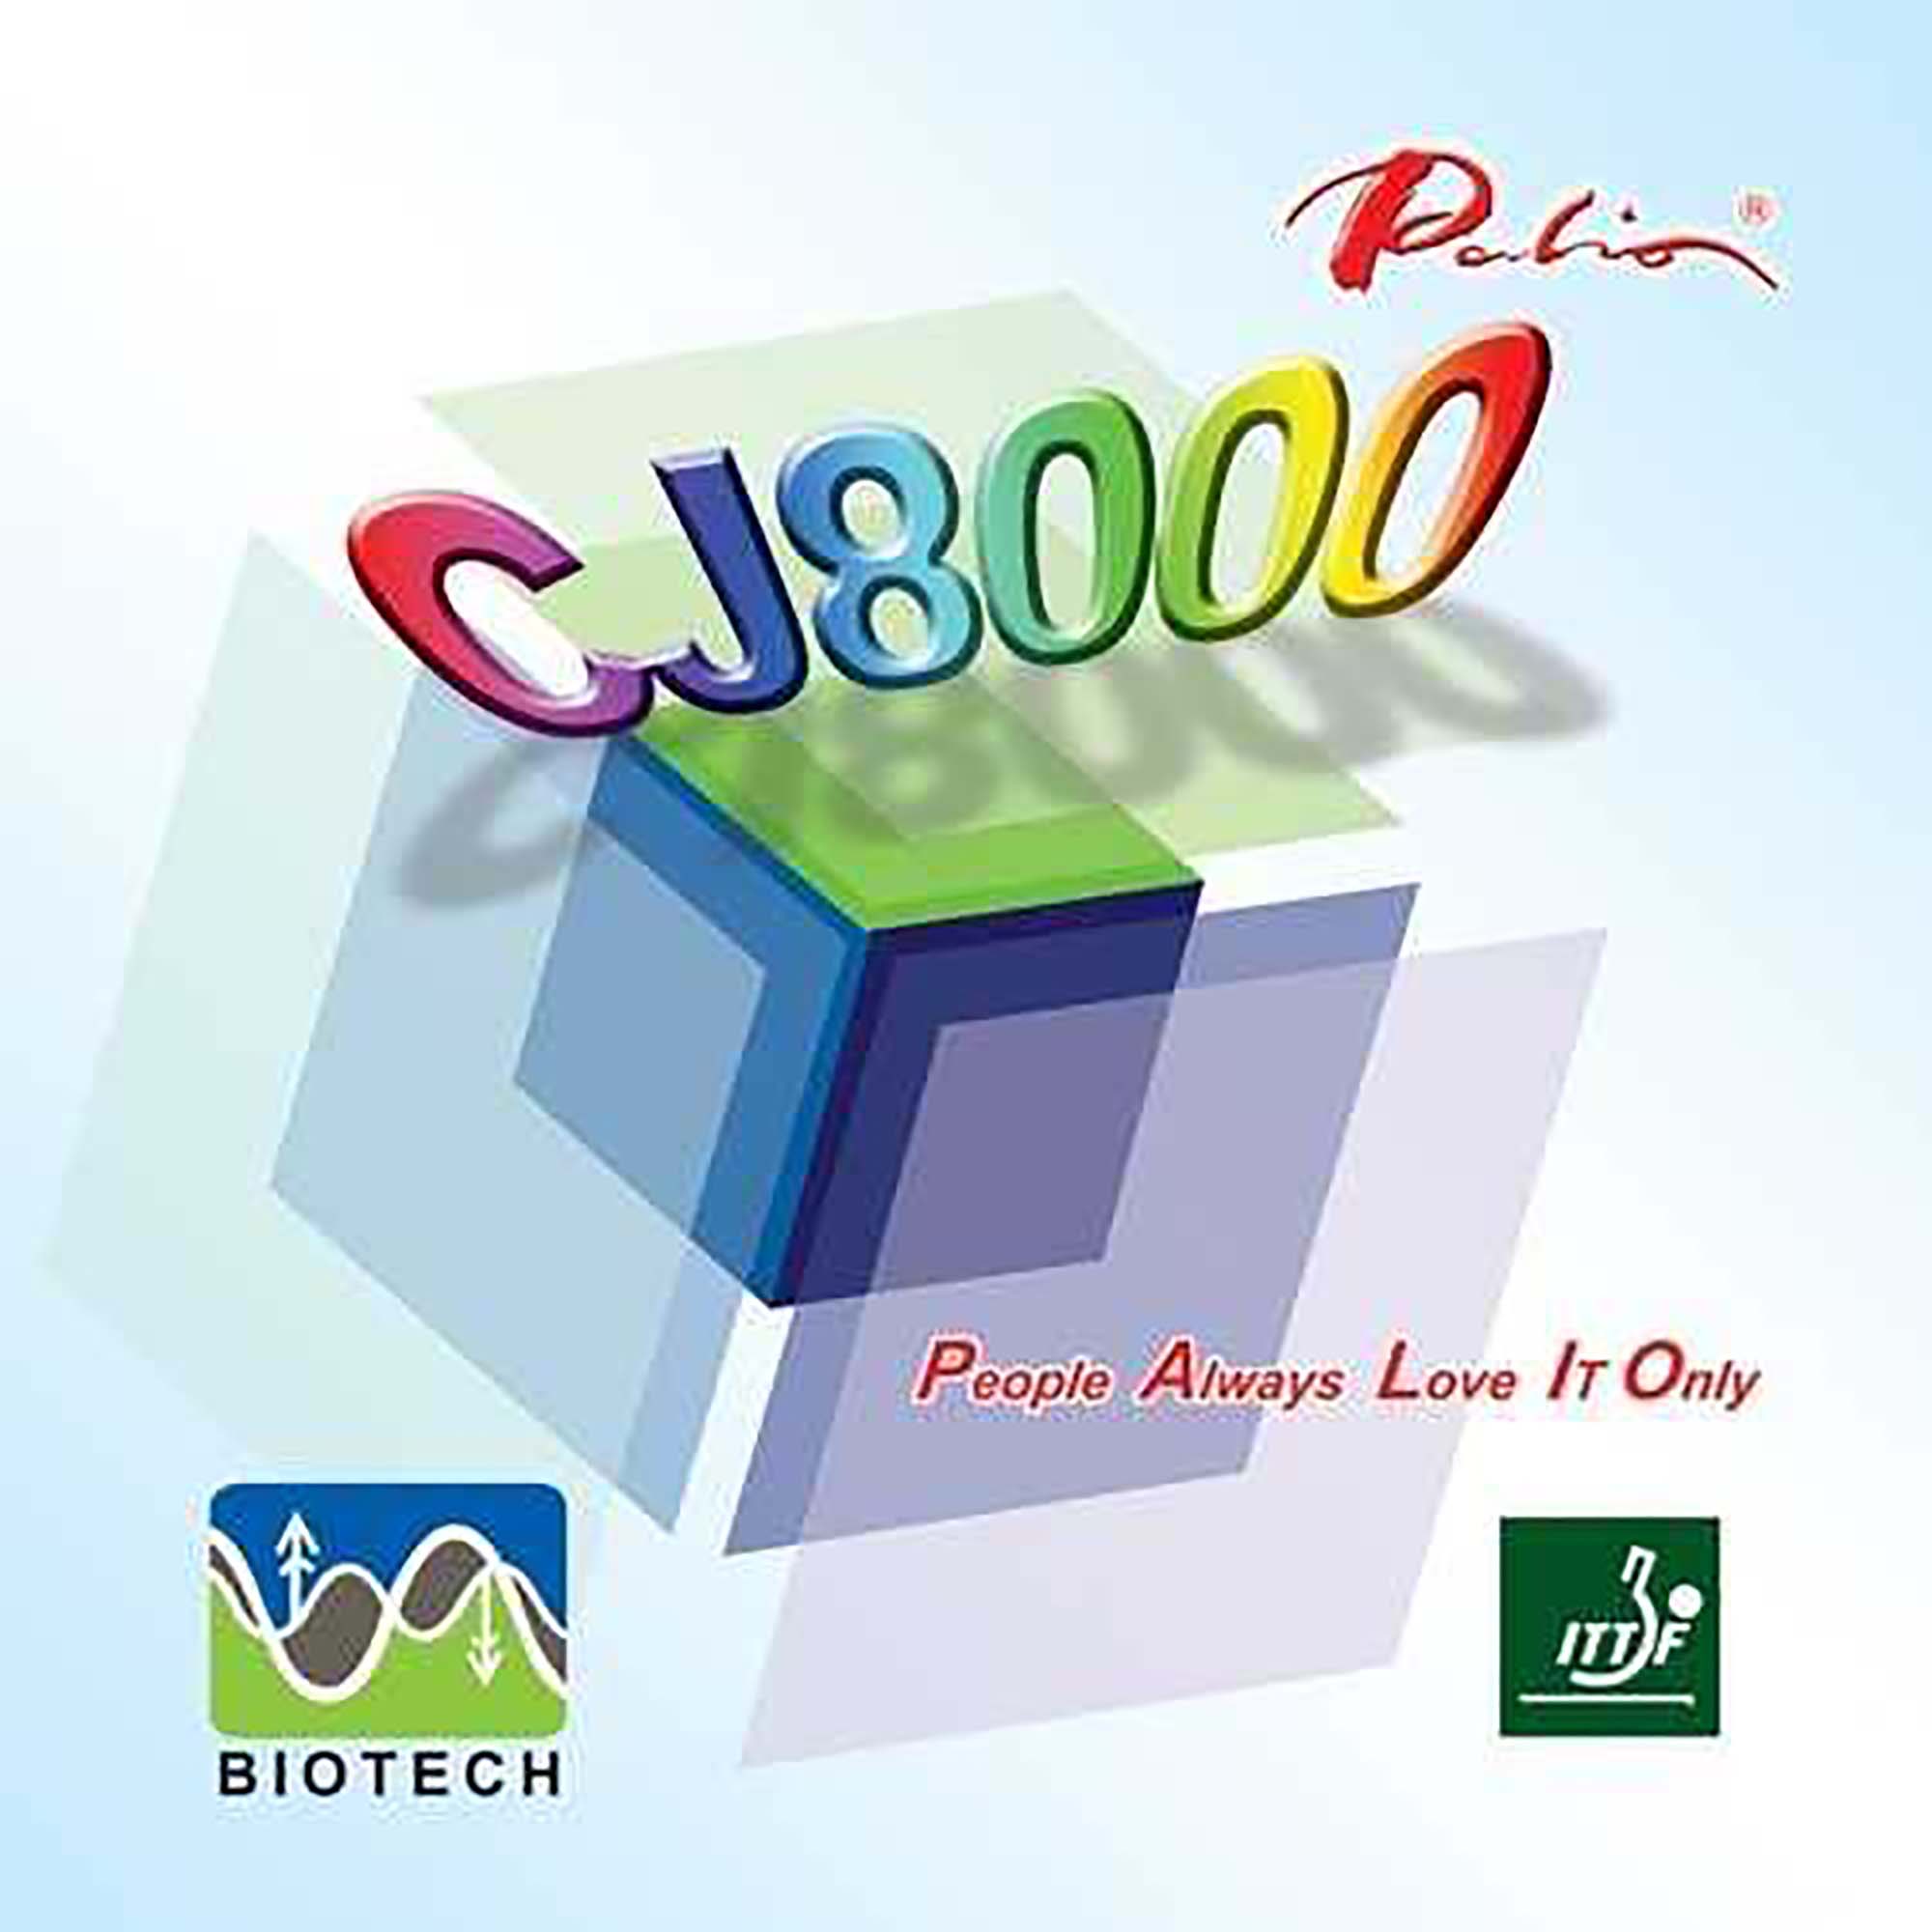 Palio Belag CJ 8000 Biotech 42-44° rot 1,8 mm